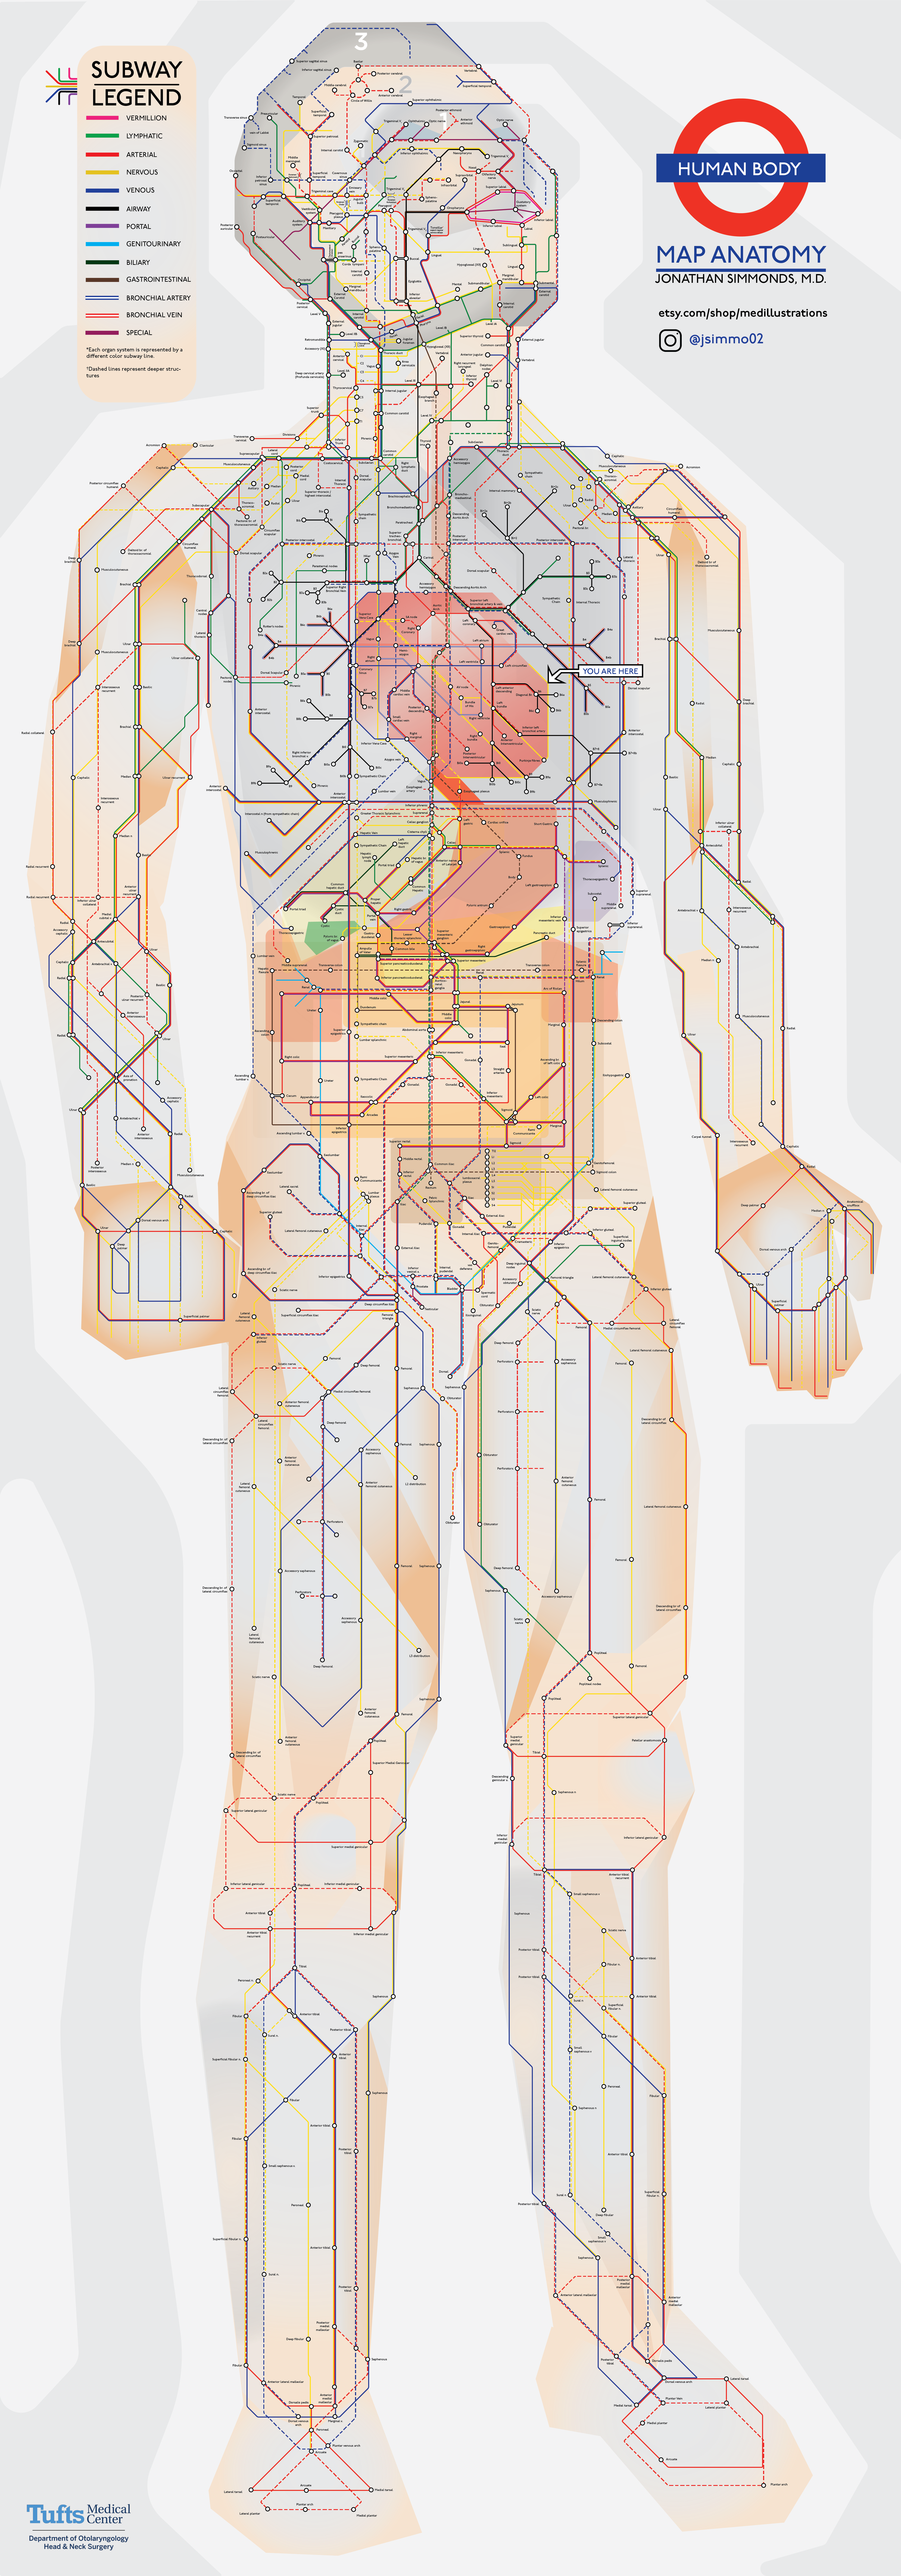 An Illustrated Subway Map of Human Anatomy